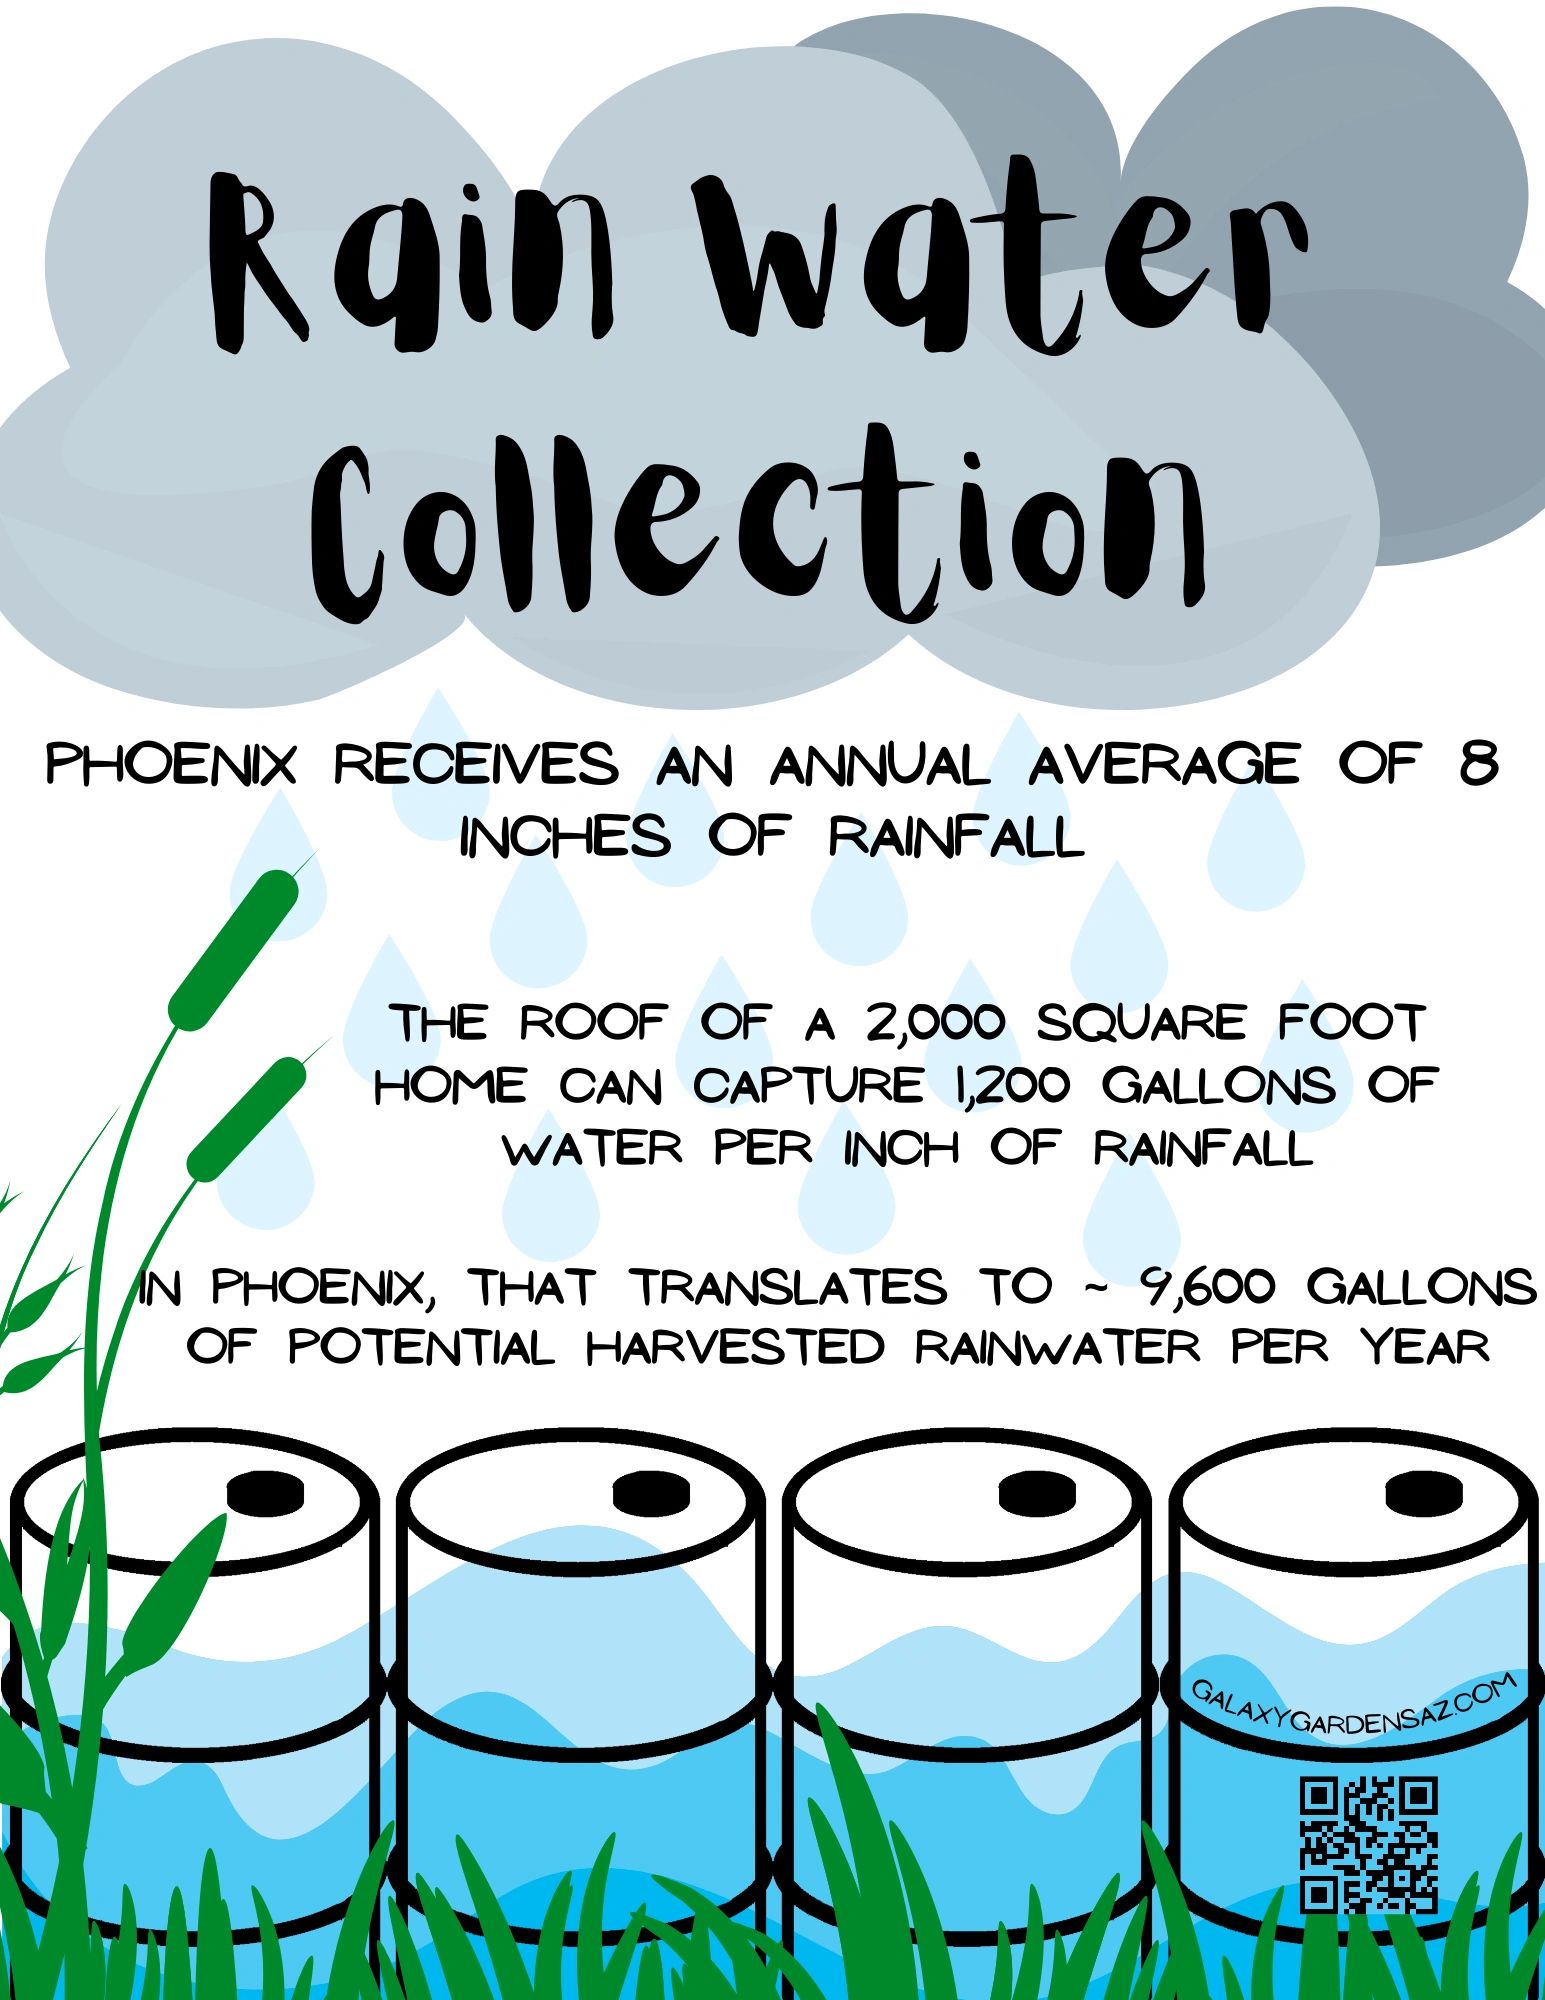 Rain Water Collection Rainwater harvesting Phoenix, galaxy garden gardens